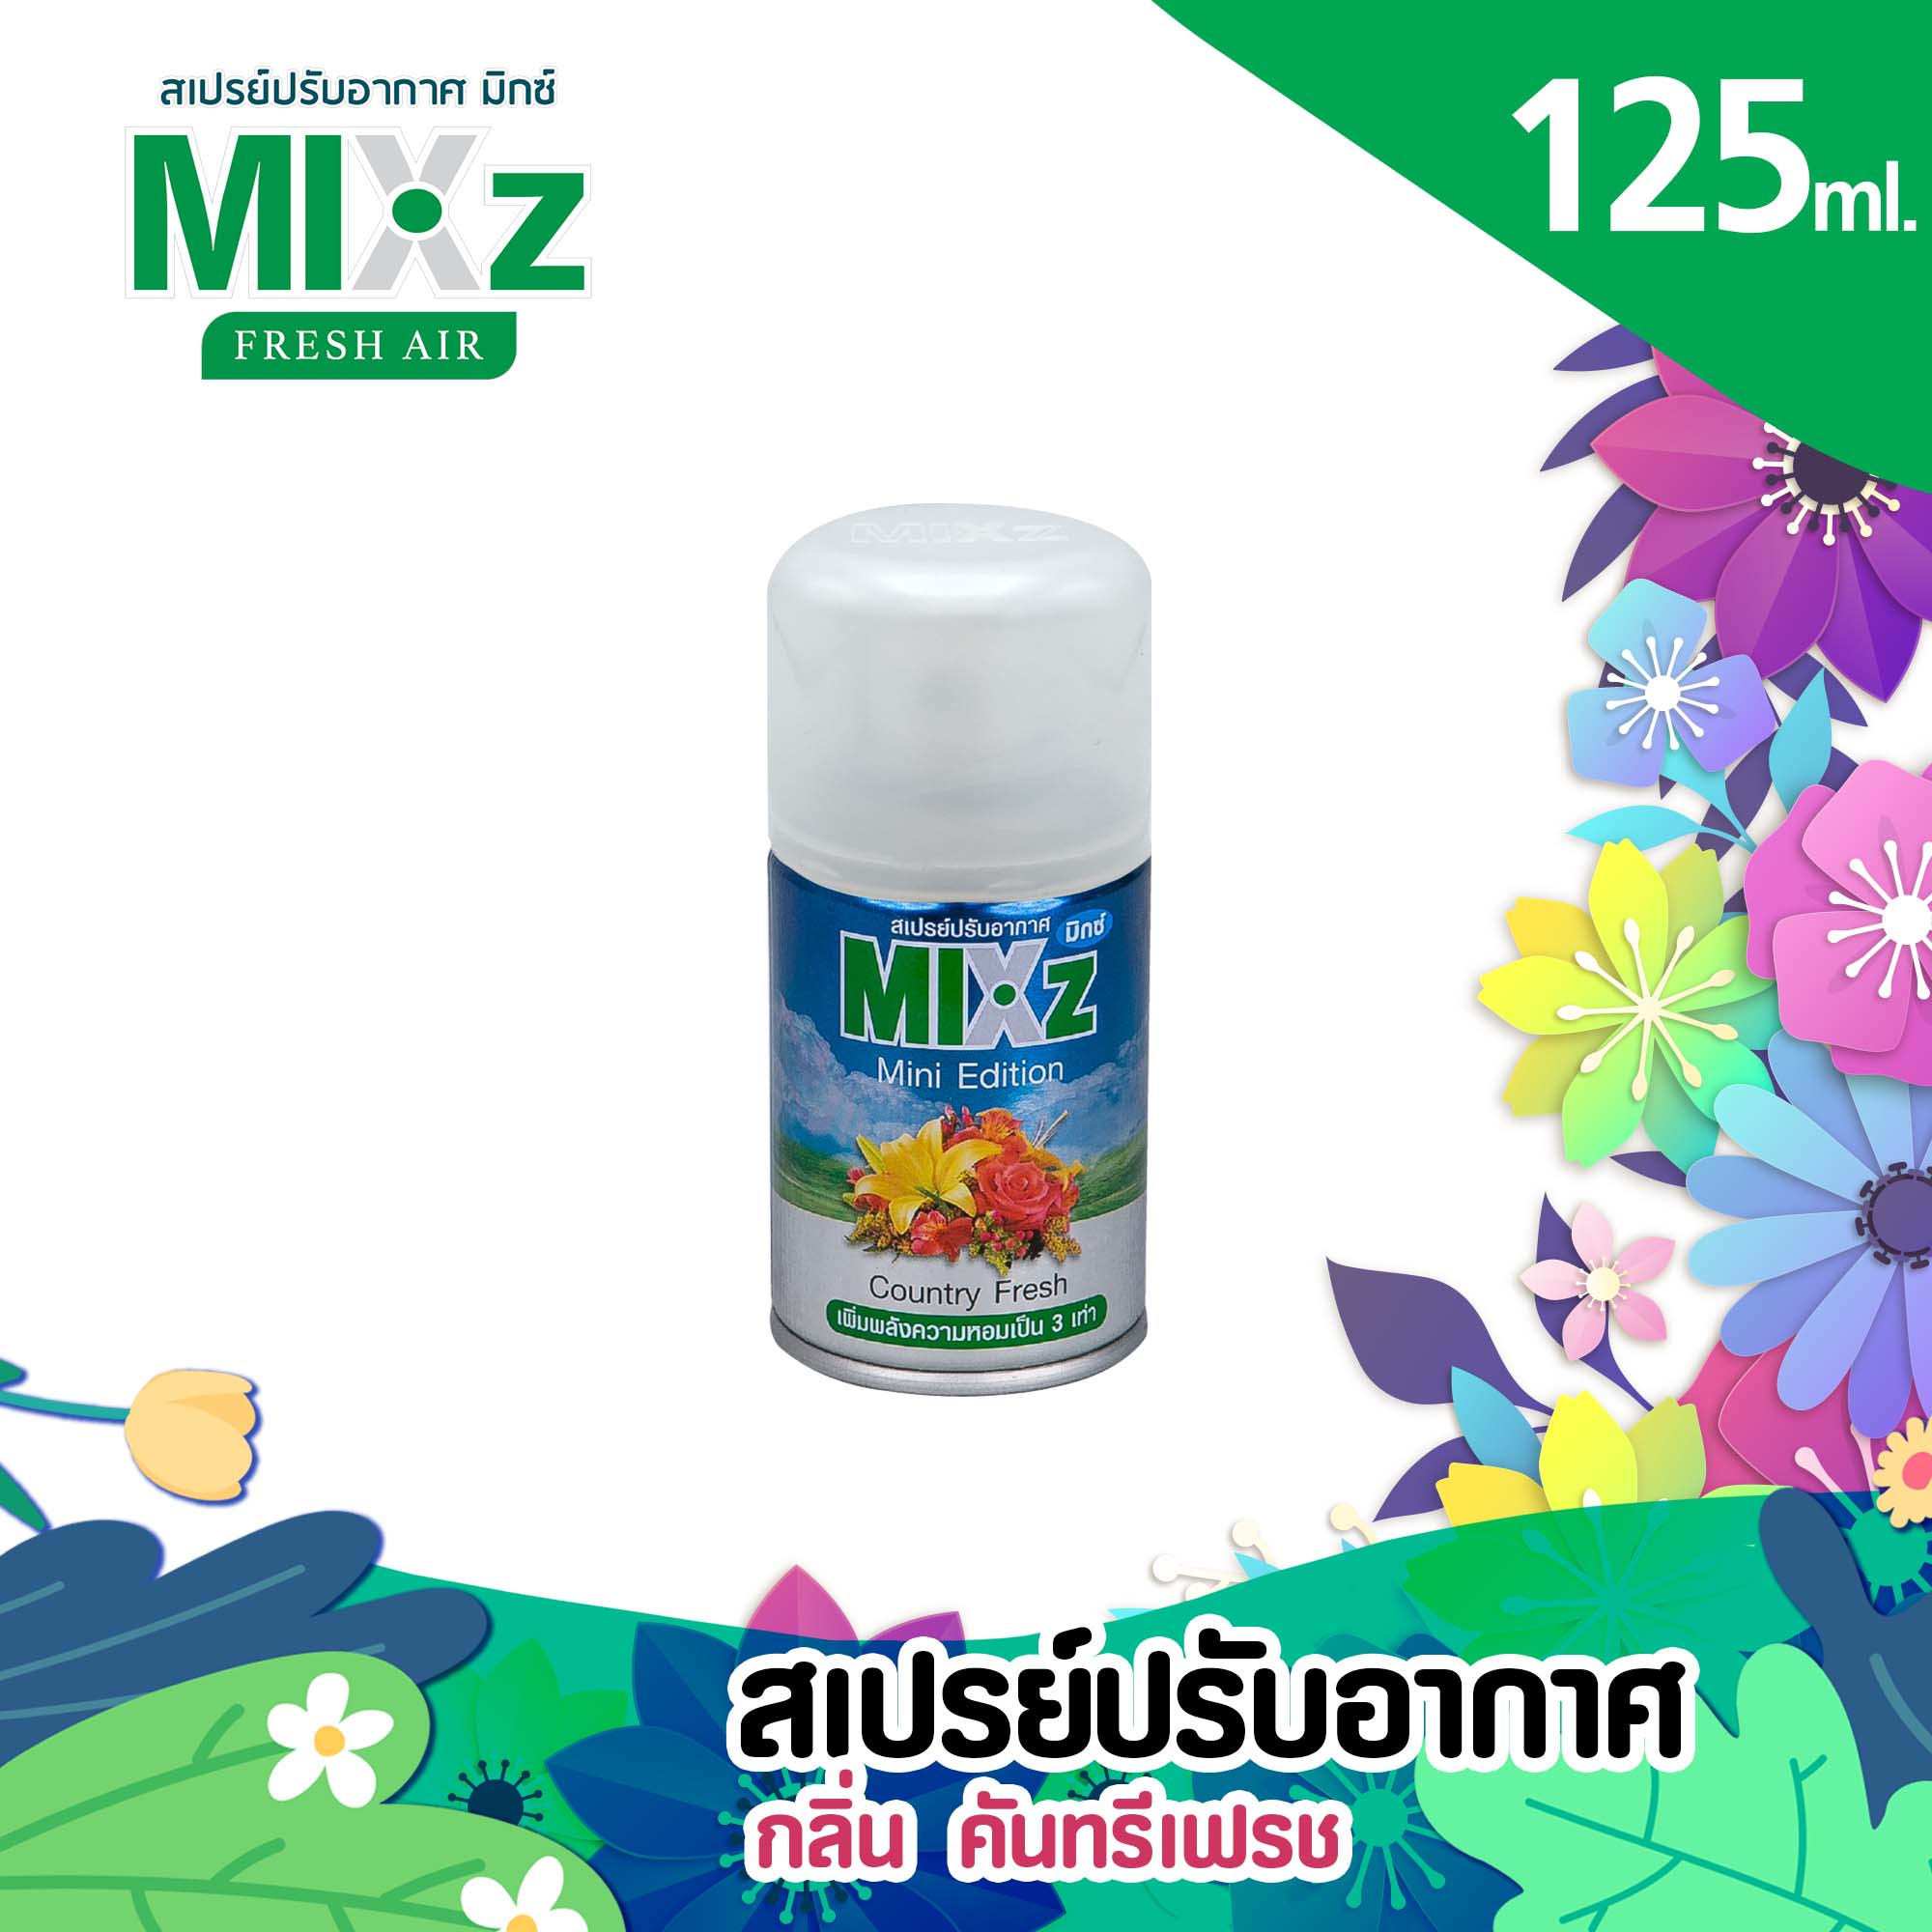 Mixz Mini Edition น้ำหอมสเปรย์ปรับอากาศ กลิ่นคันทรีเฟรช 125 ml.